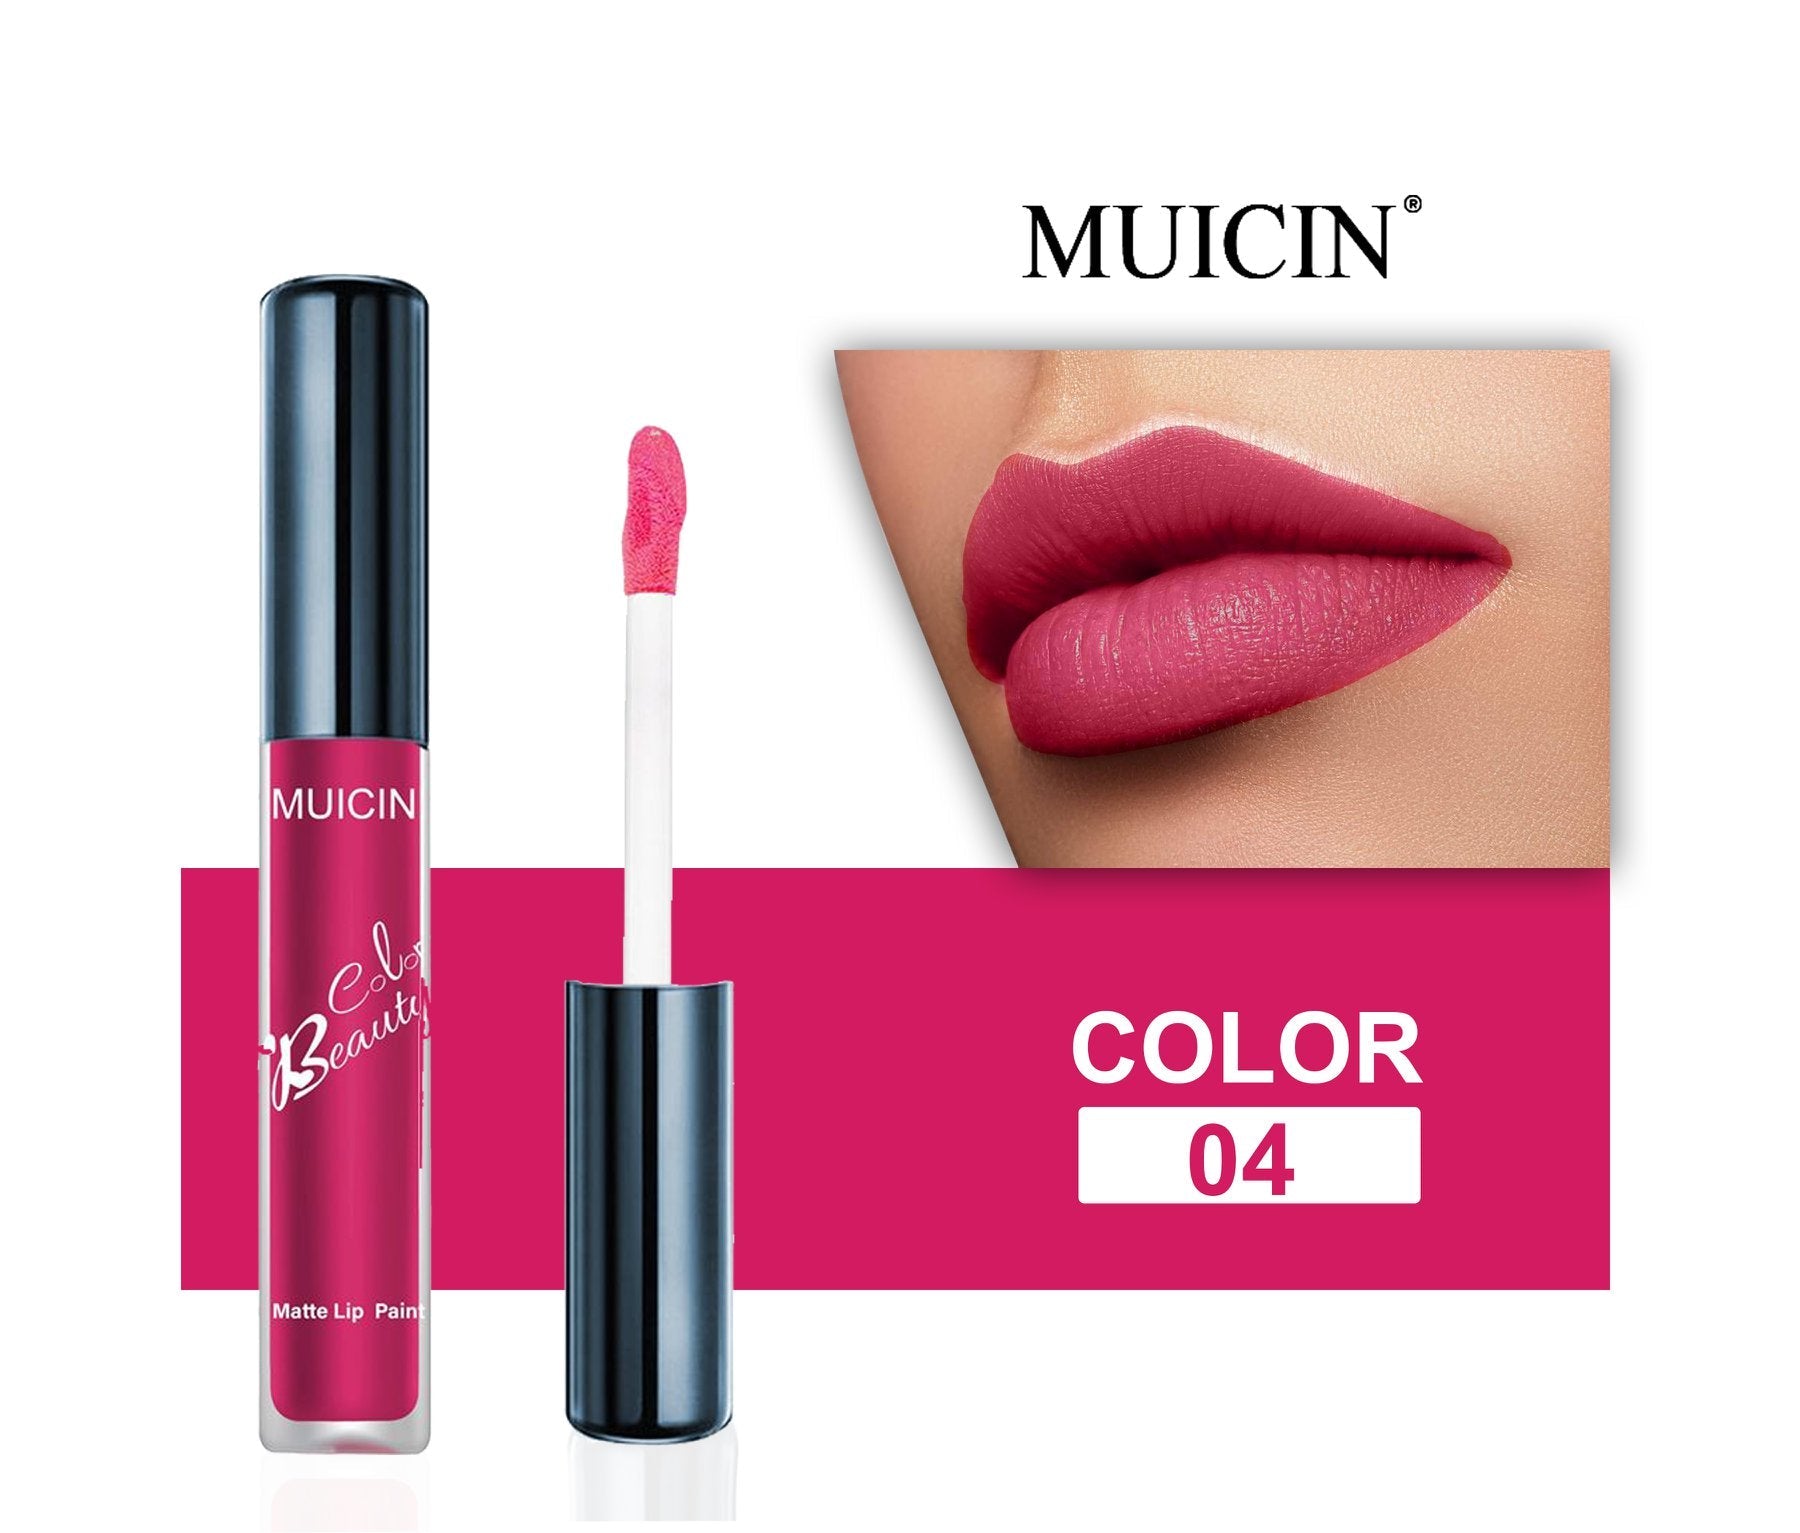 MUICIN - Matte Lip Gloss 12 Shades